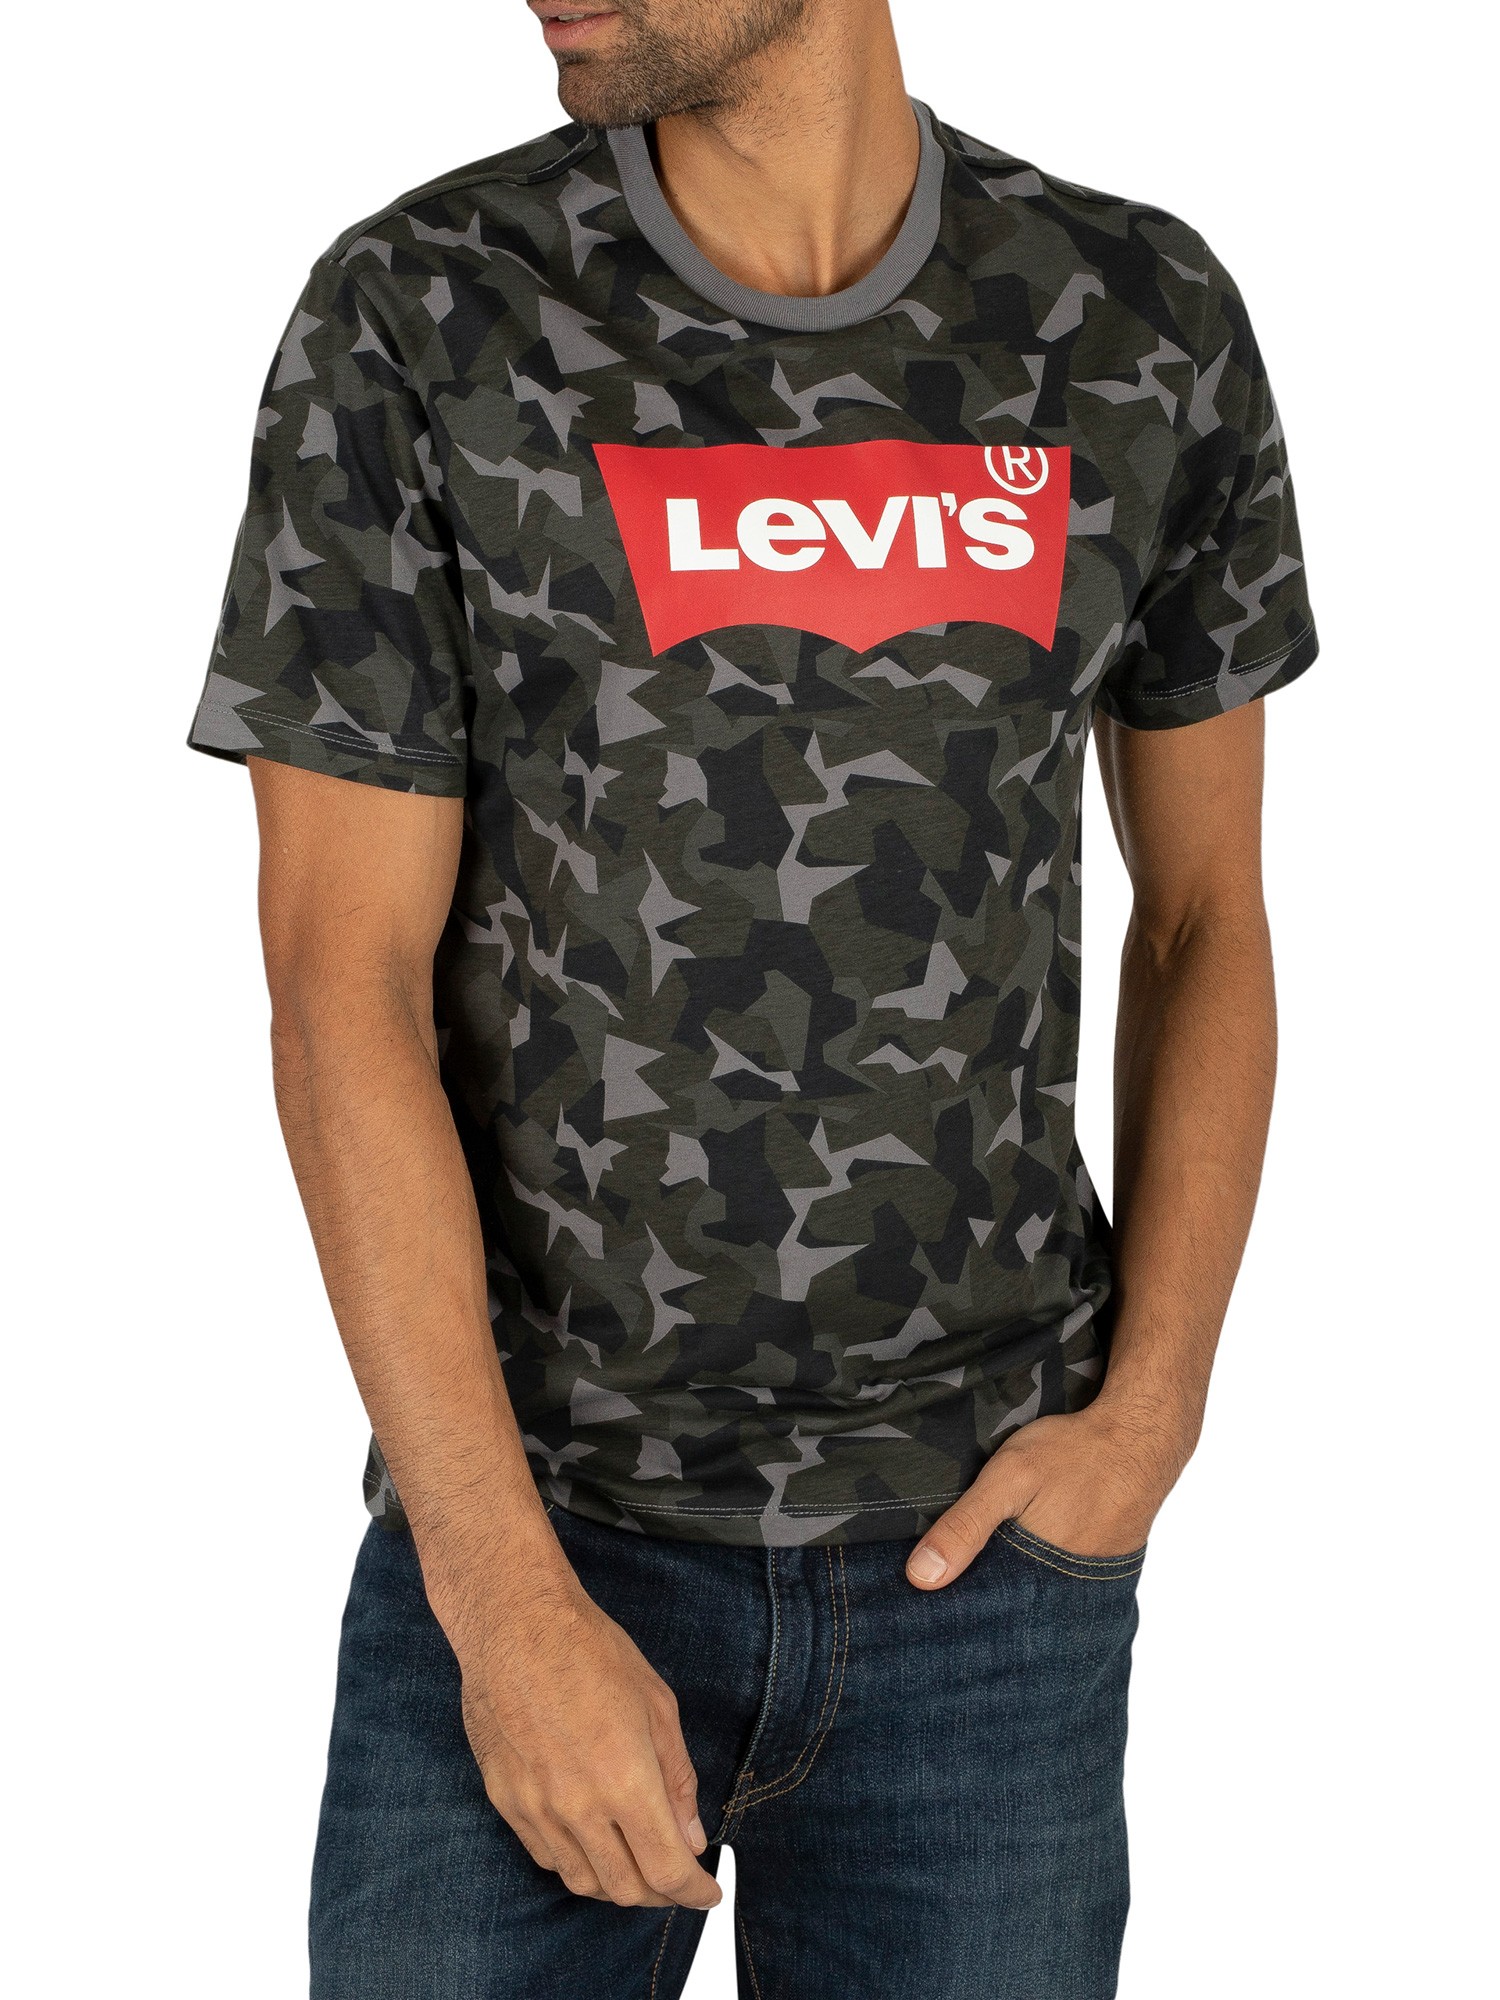 levis camouflage t shirt